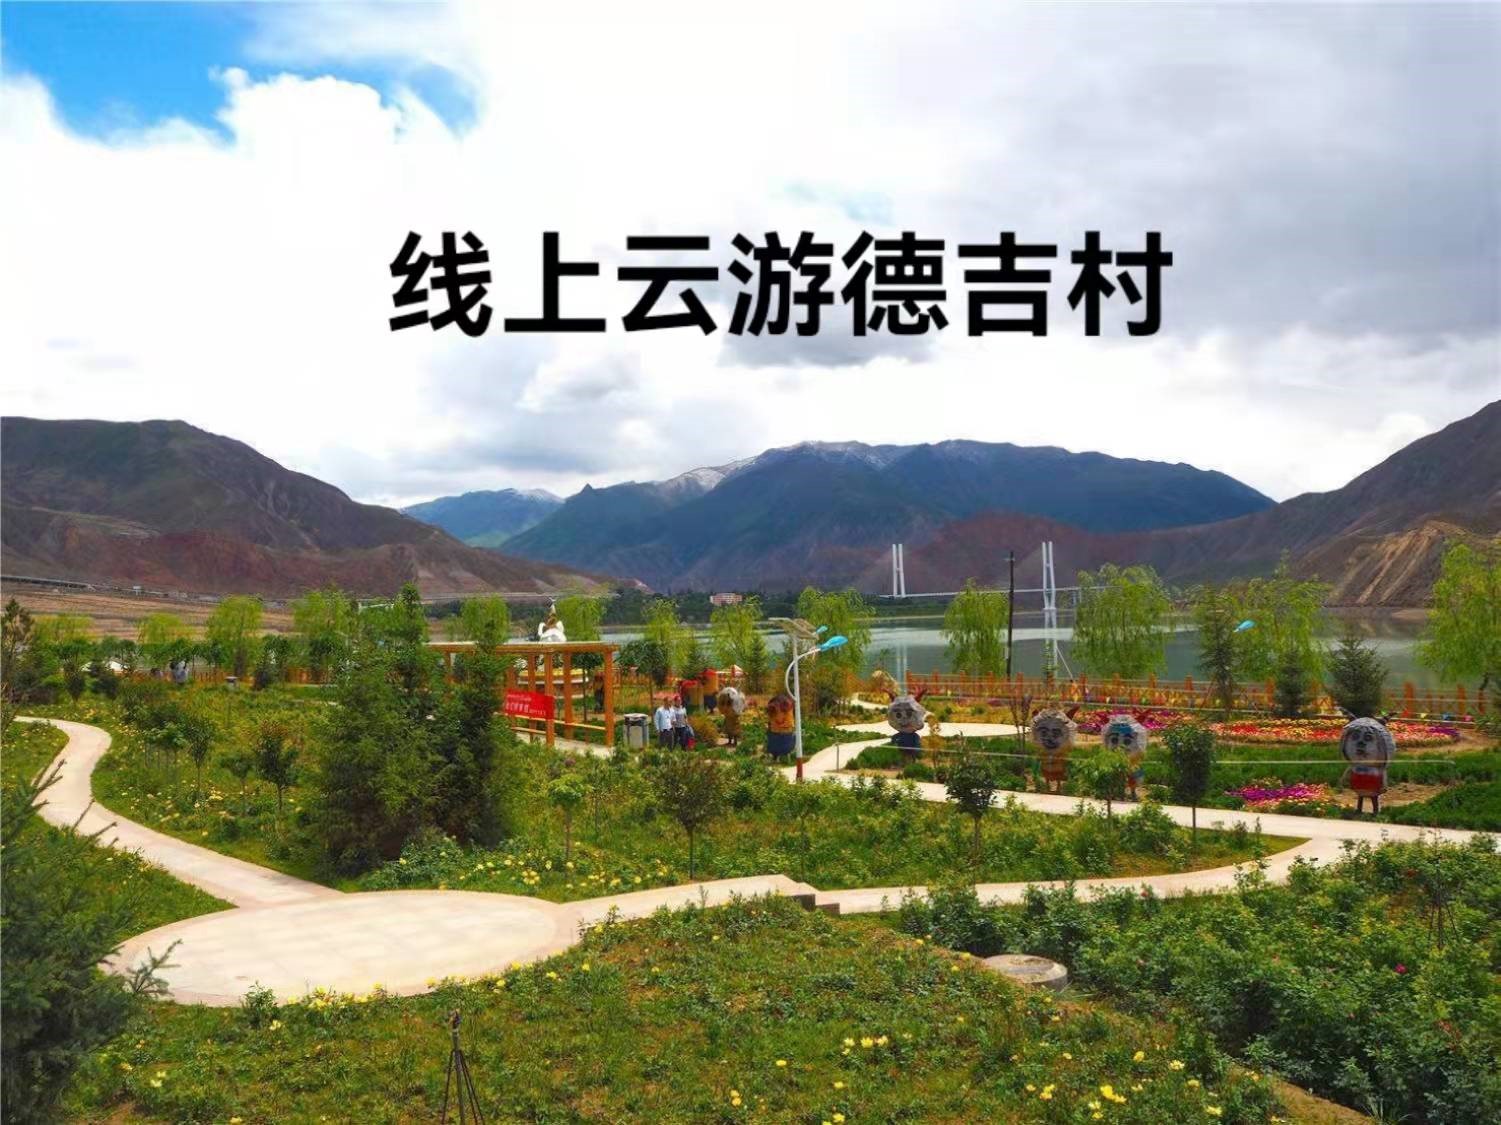 Online Tour of “Little Sanya” in Qinghai Province- -Deji Village